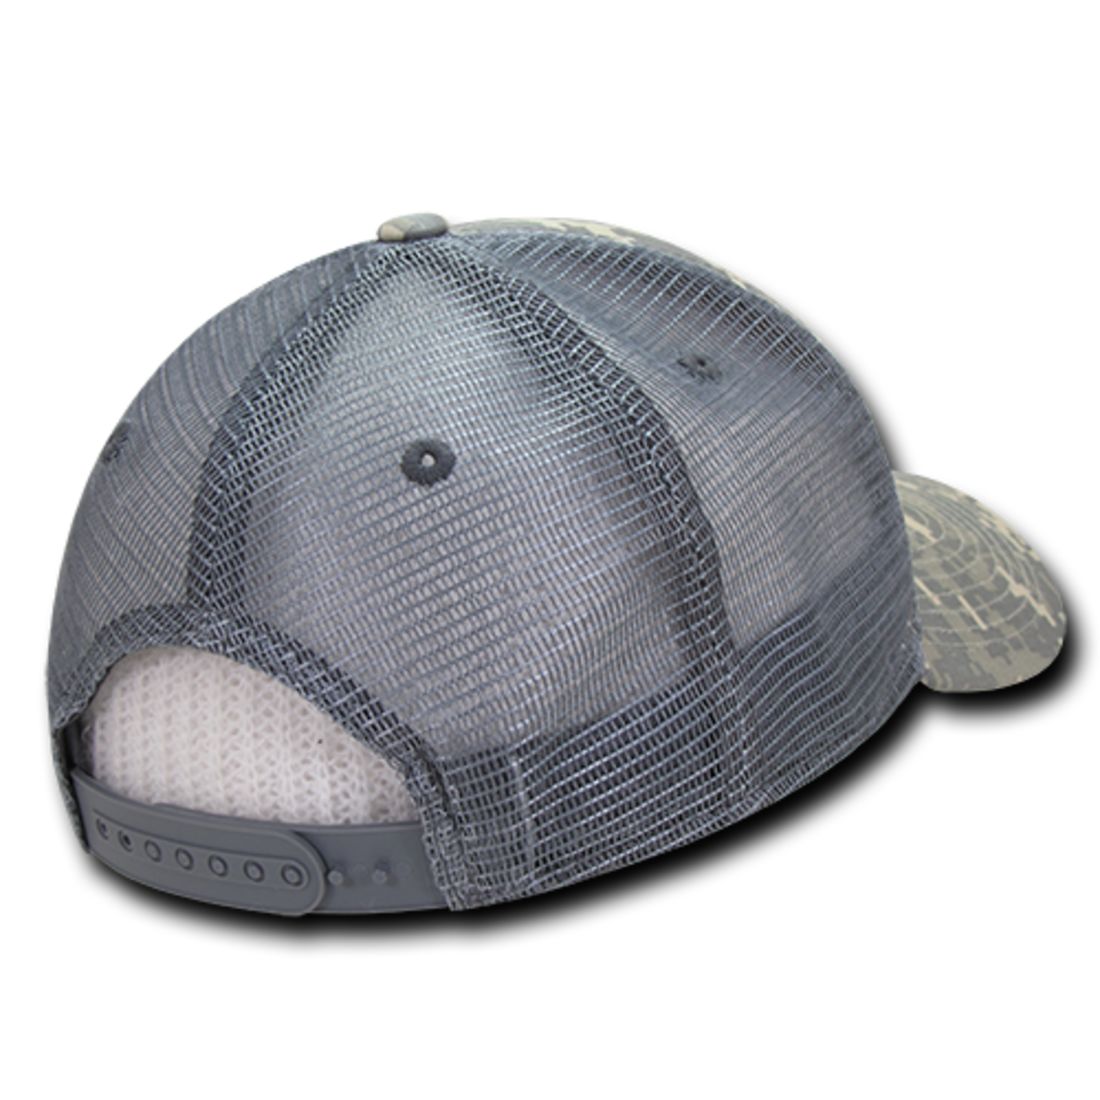 Decky 225 Camo Trucker Hats Low Profile 6 Panel Curved Bill Baseball Caps Wholesale